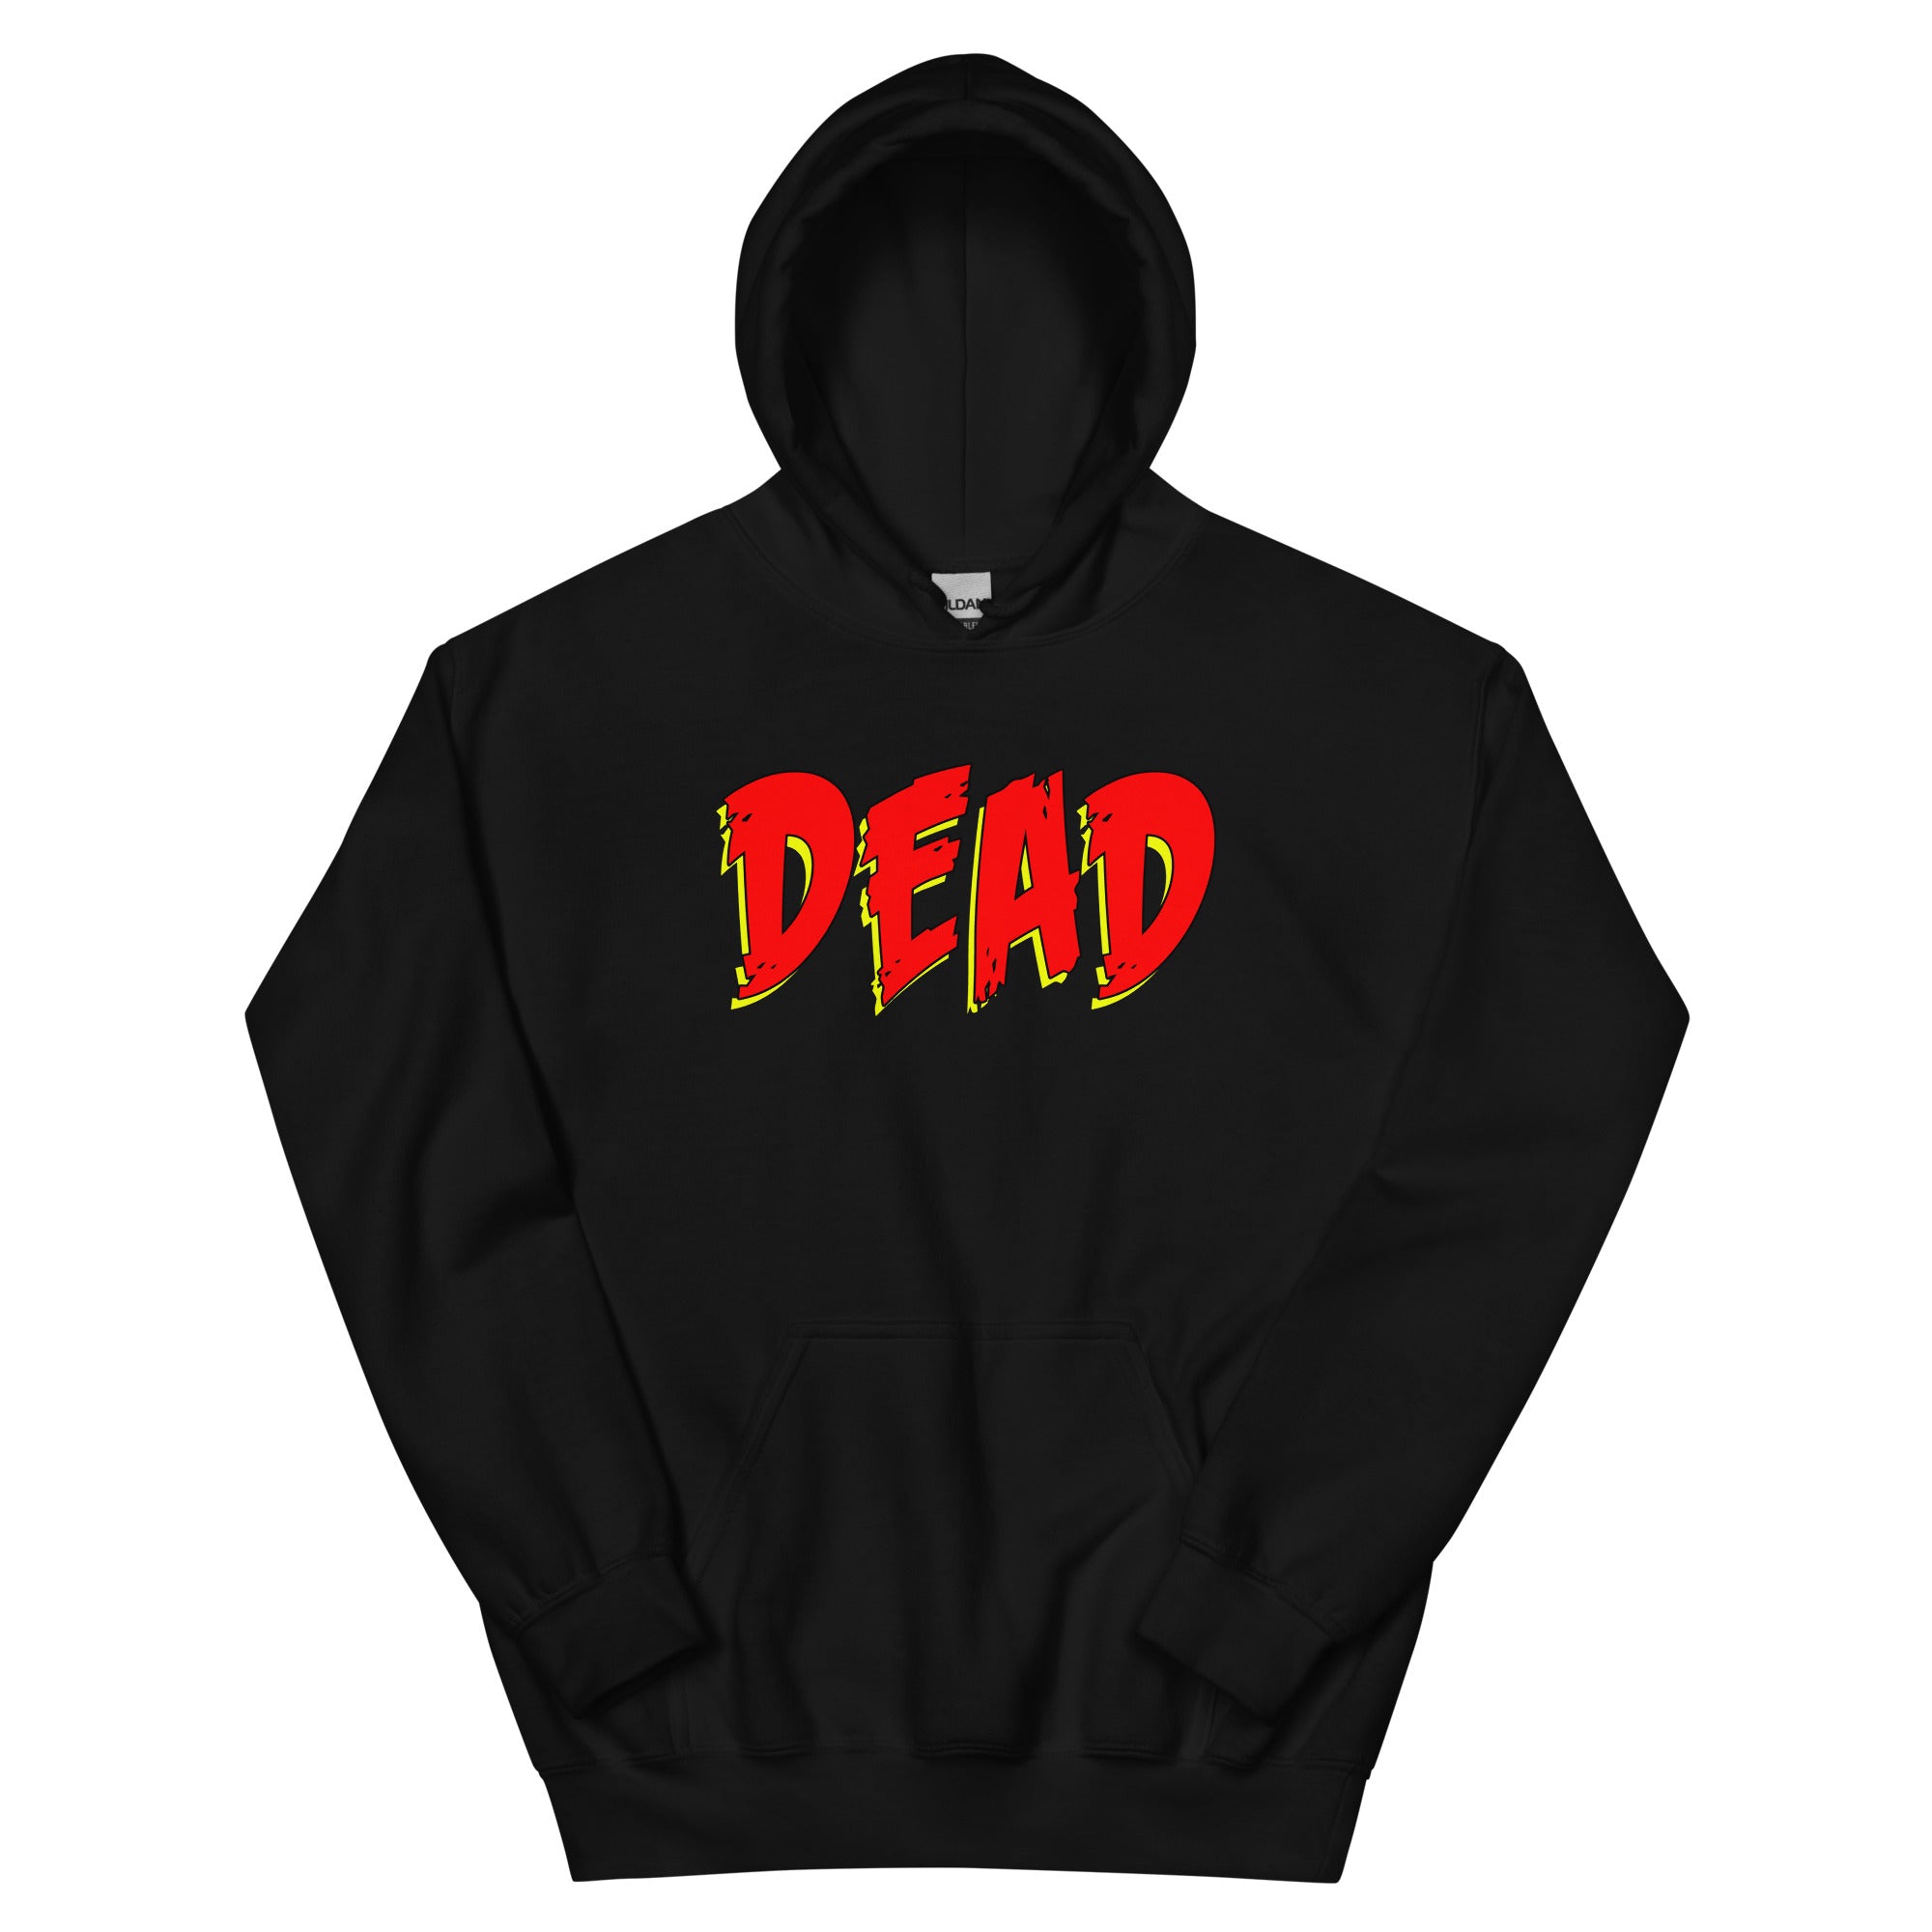 Dead Depressed Gothic Emo Style Unisex Hoodie Sweatshirt